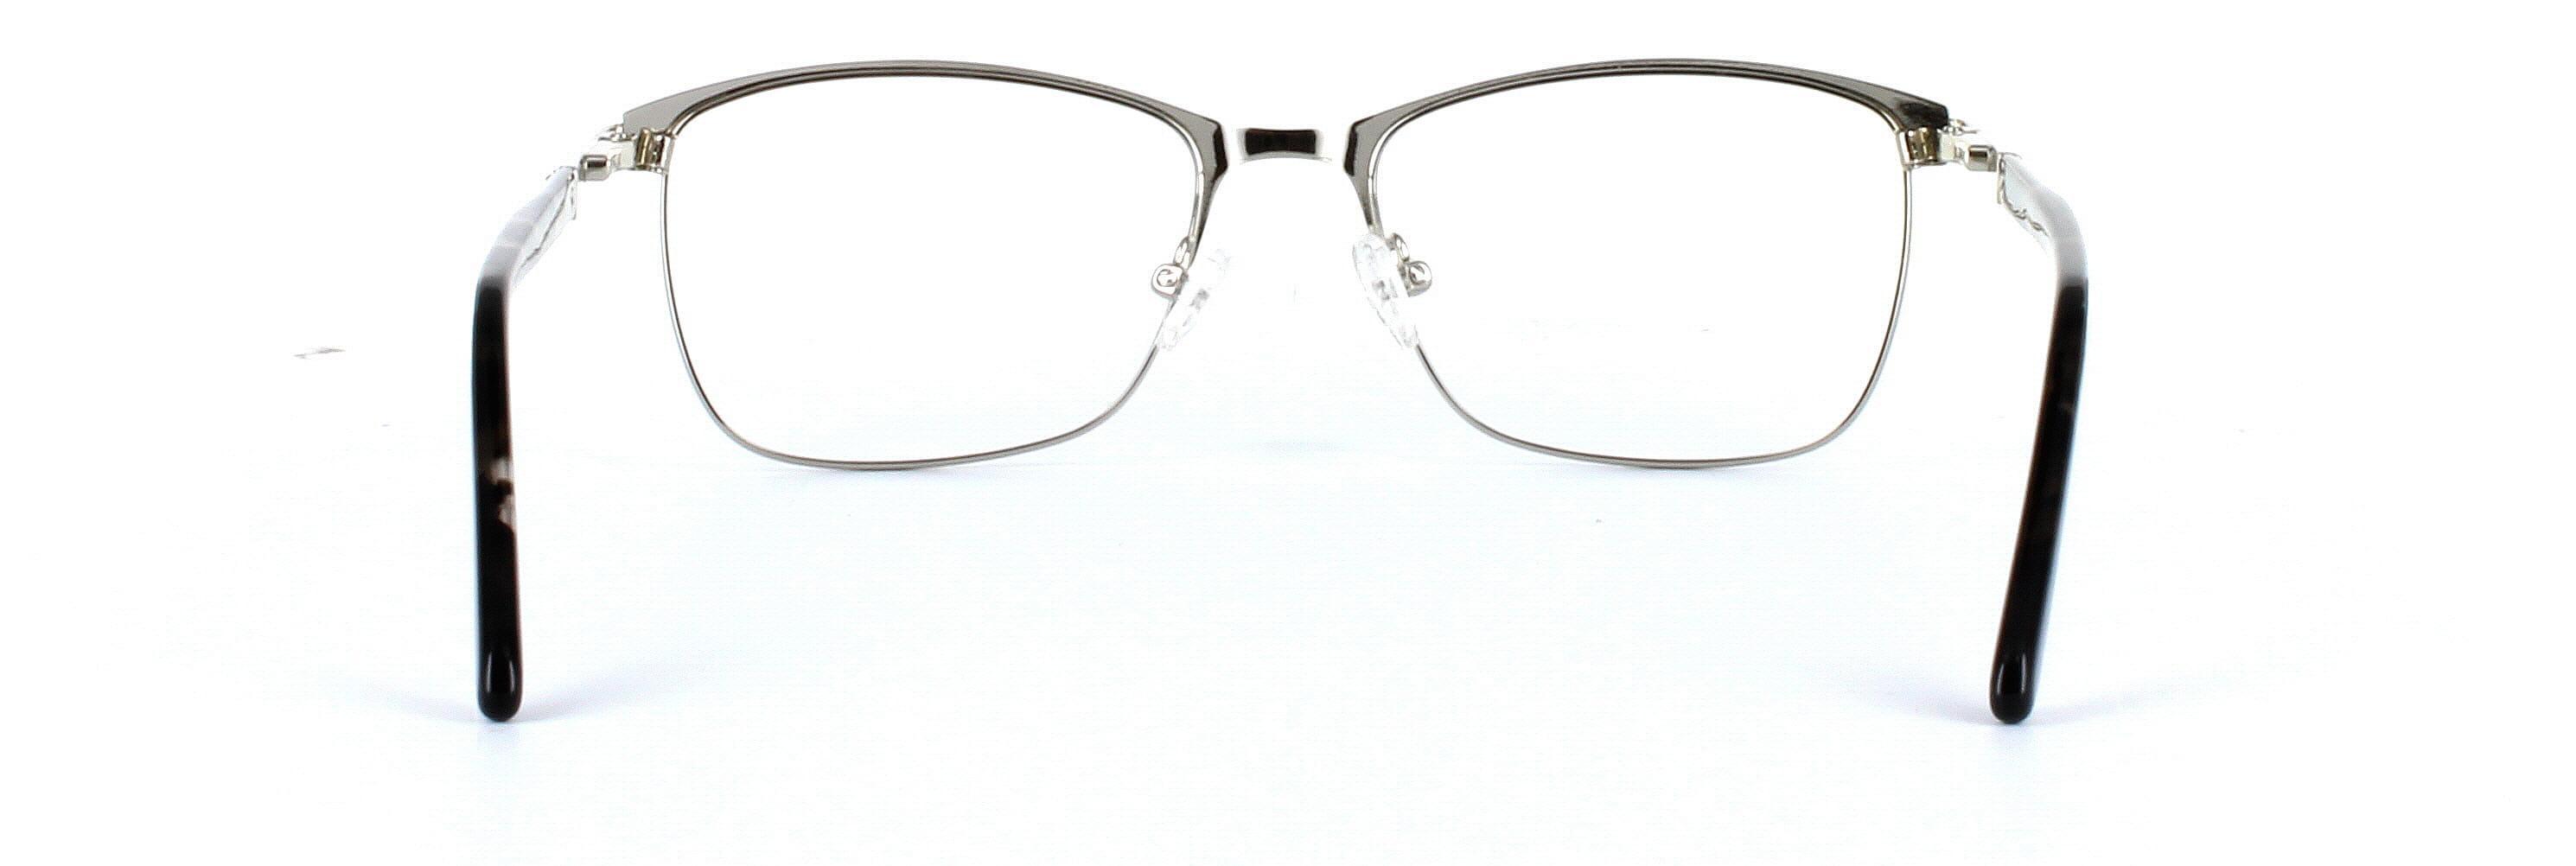 Pheobie Black and Silver Full Rim Oval Metal Glasses - Image View 3